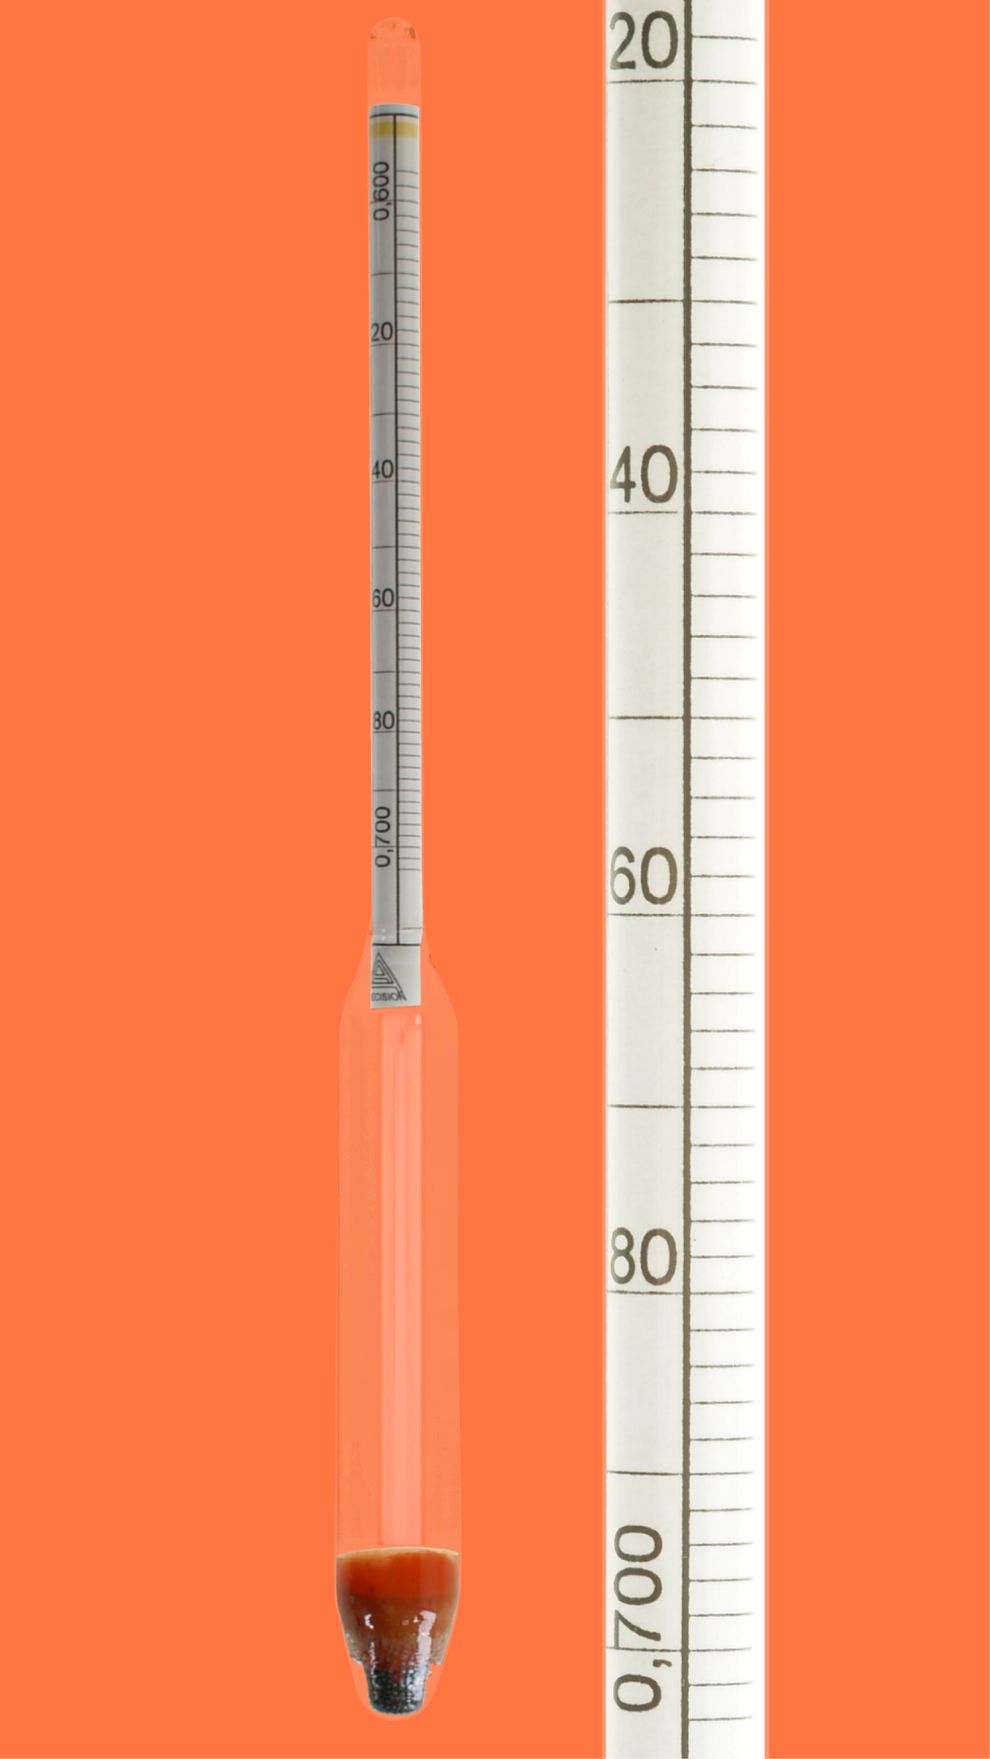 Aräometer, DIN 12791, M100, 0,80-0,90:0,0020g/cm³, Bezugstemp. 20°C, ohne Thermometer